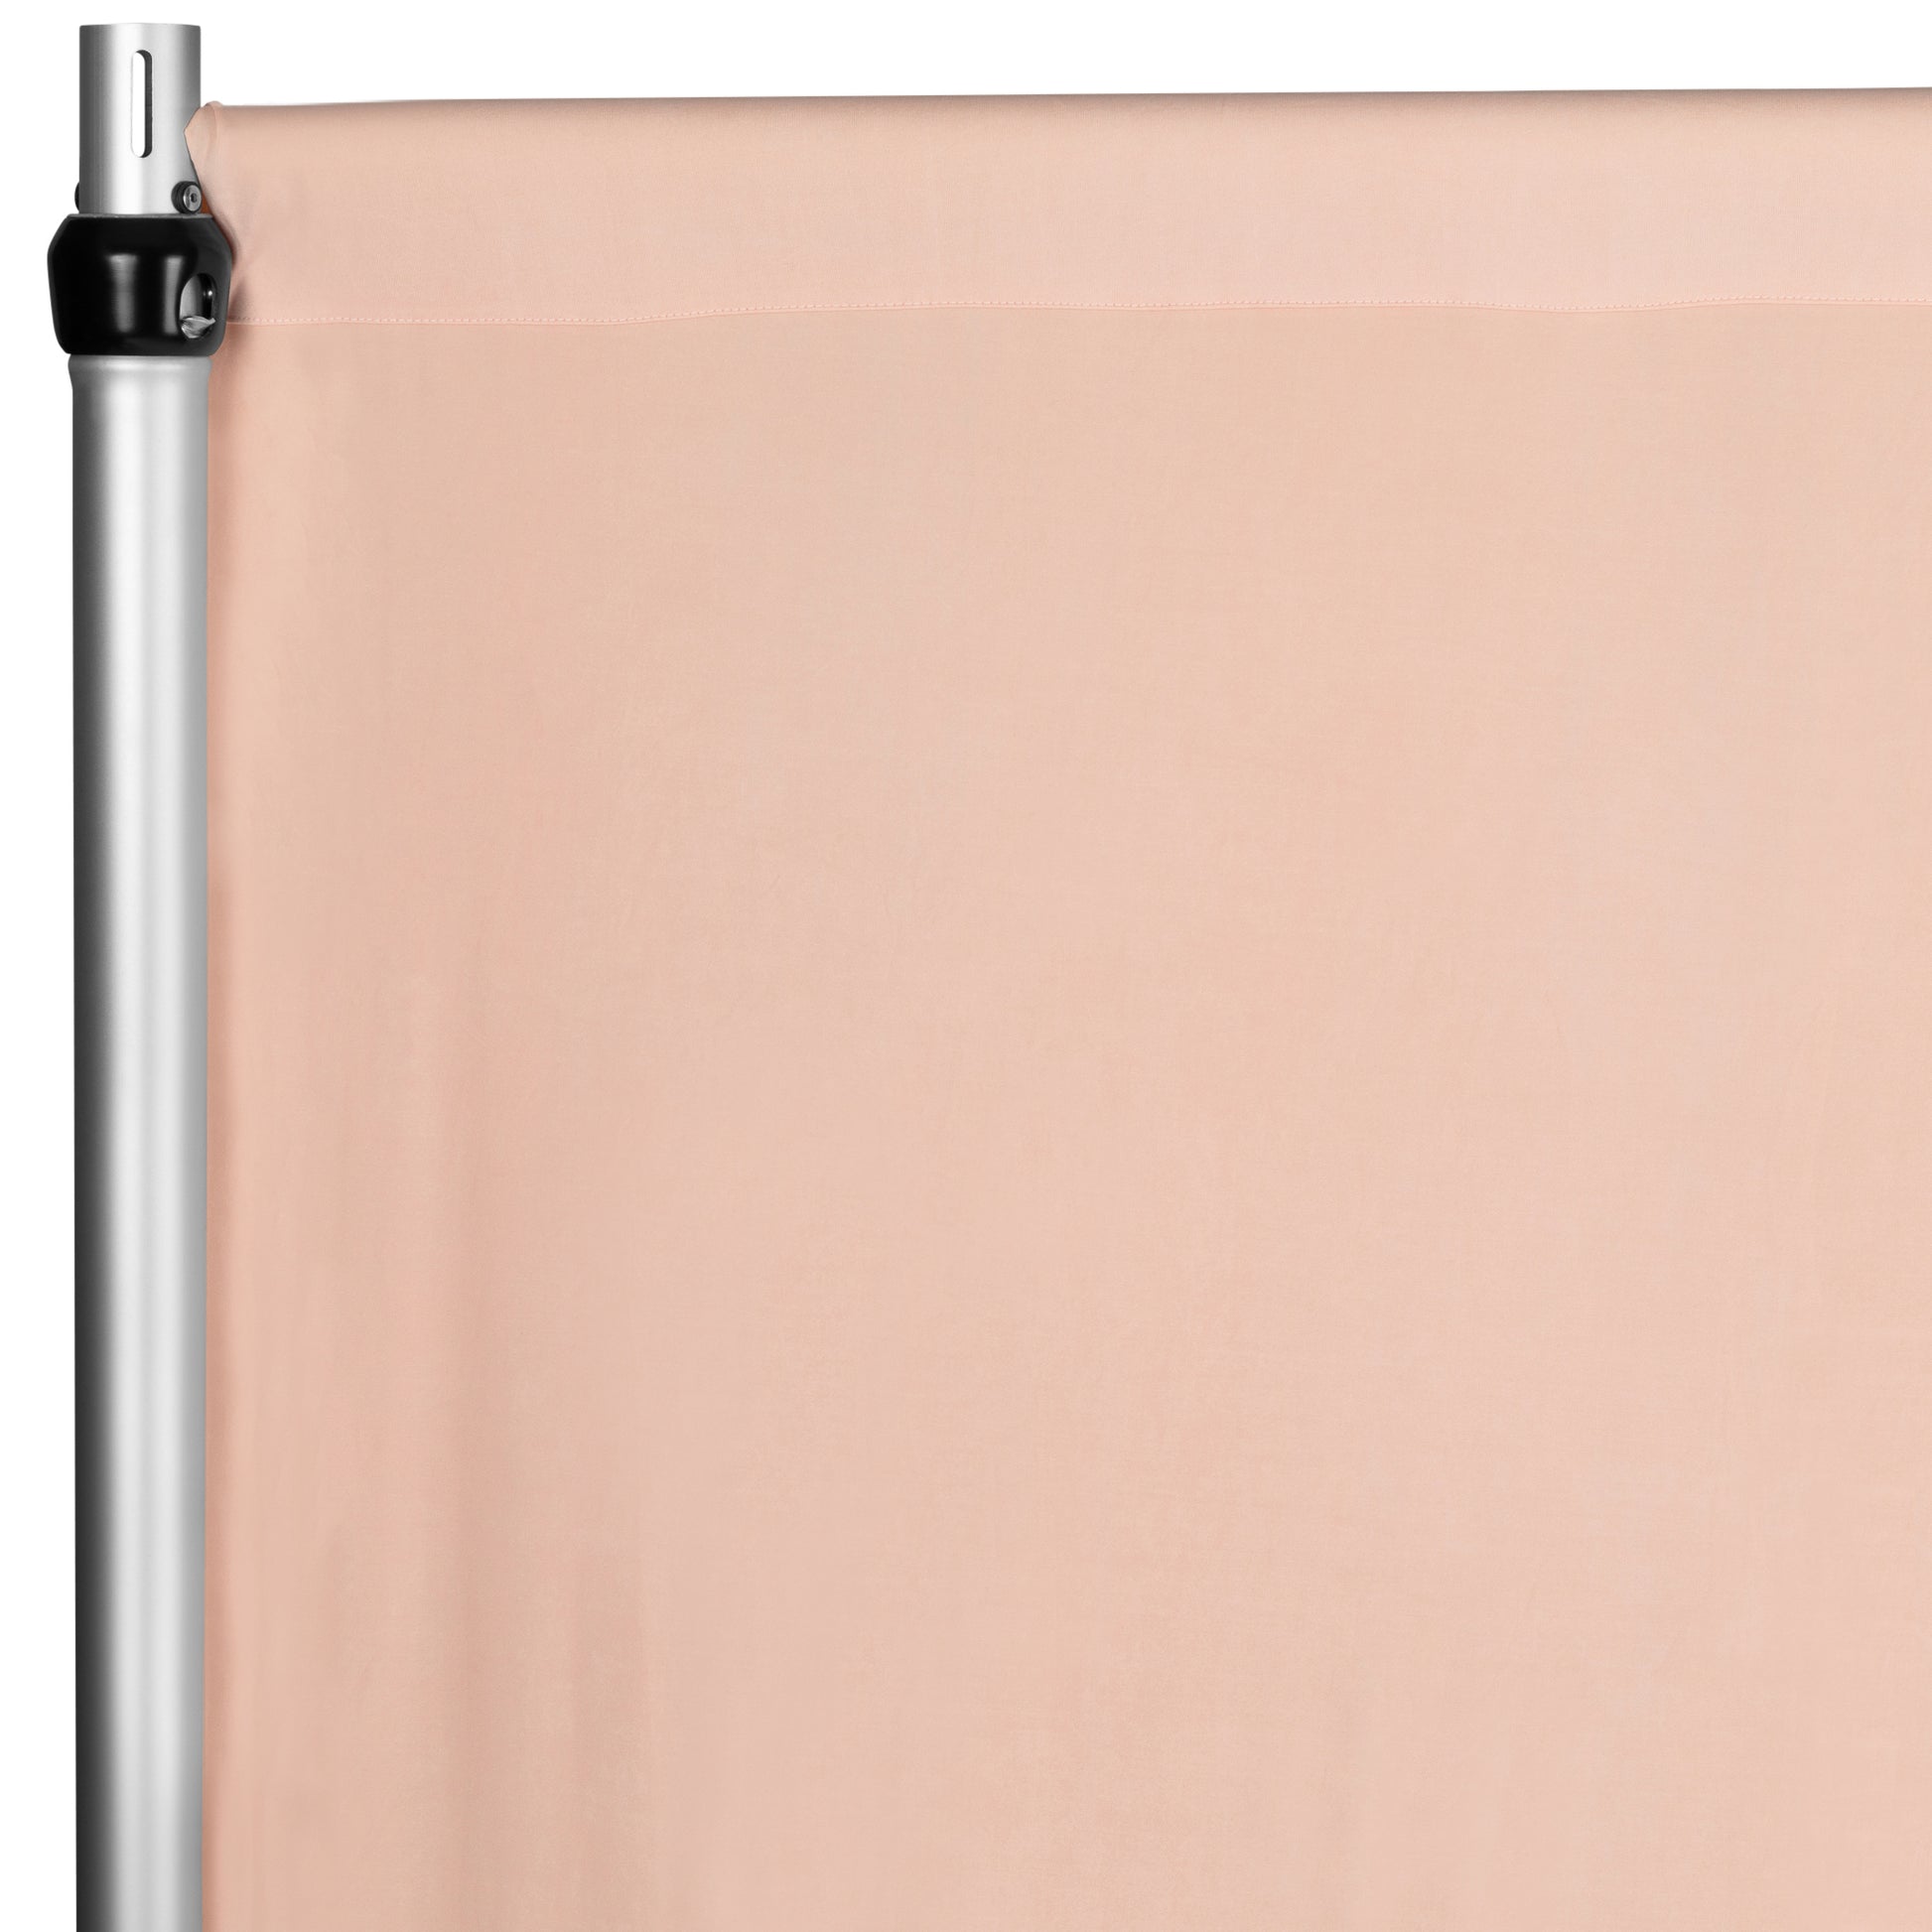 Spandex 4-way Stretch Backdrop Drape Curtain 16ft H x 60" W - Blush/Rose Gold